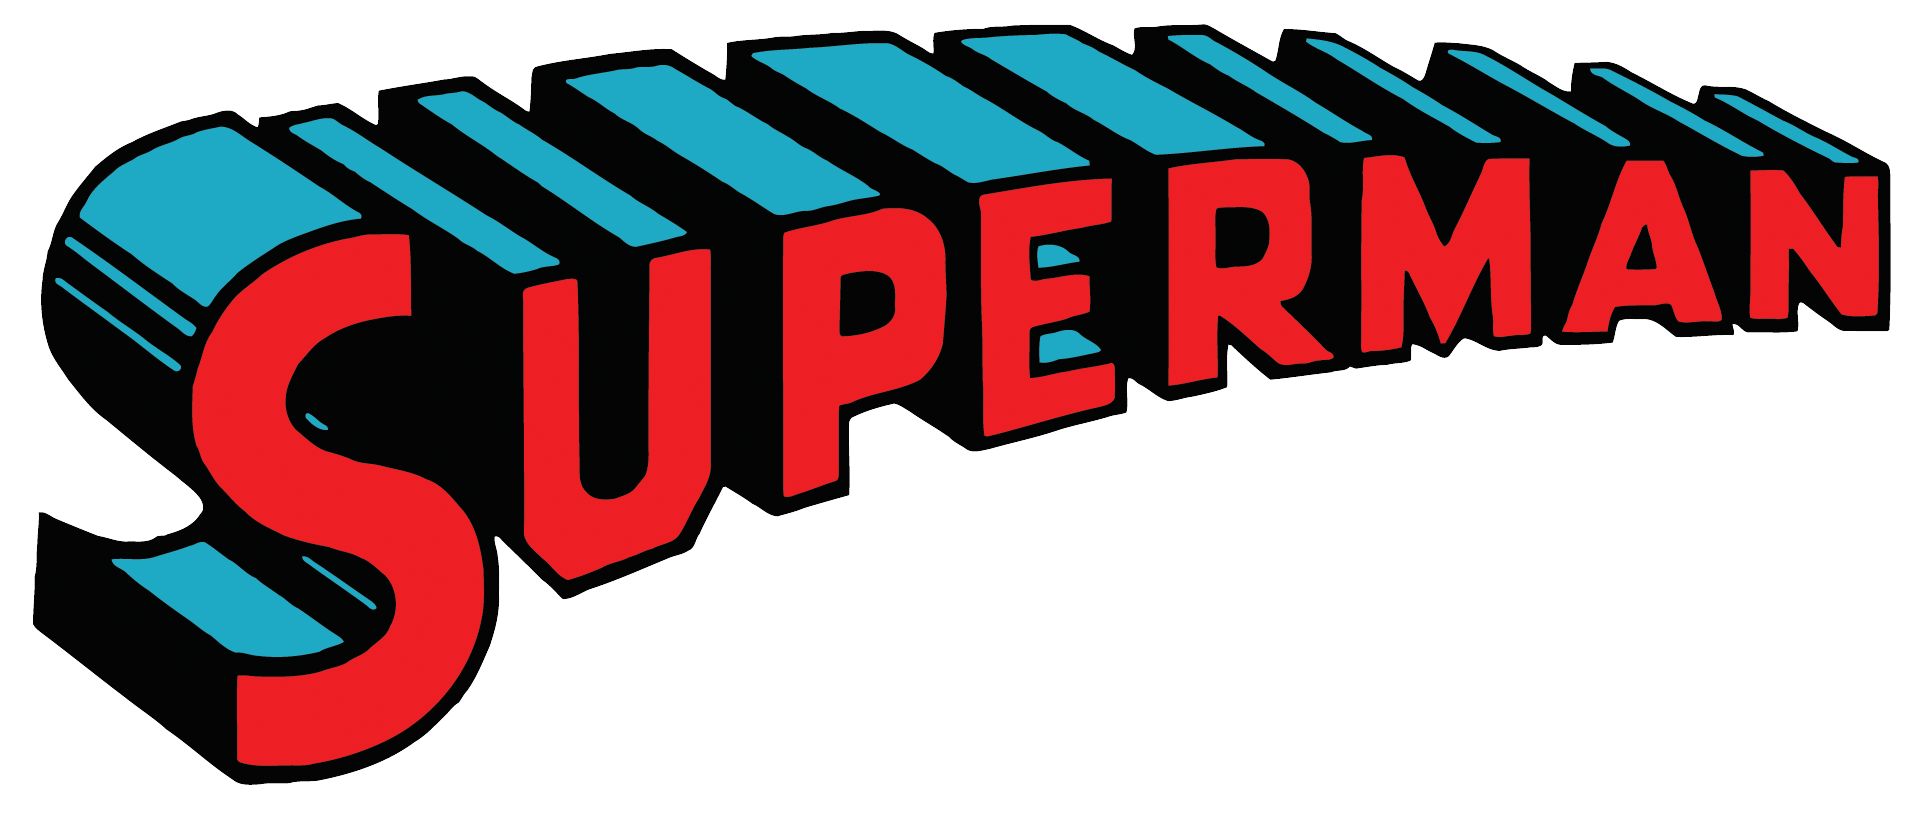 Superman Logo PNG Transparent Images | PNG All